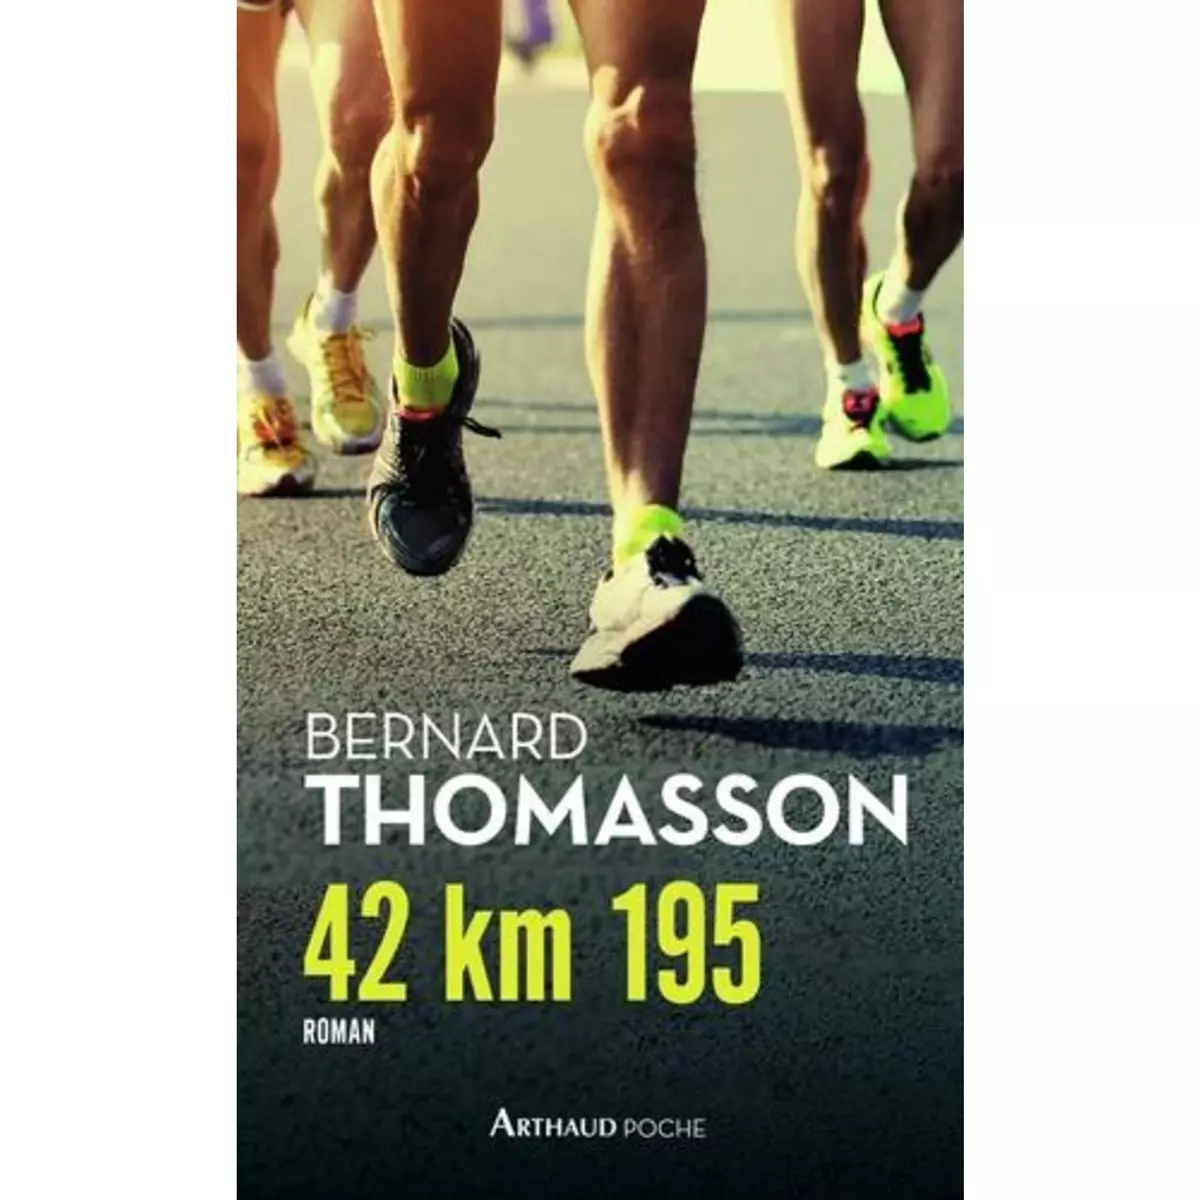  42 KM 195, Thomasson Bernard